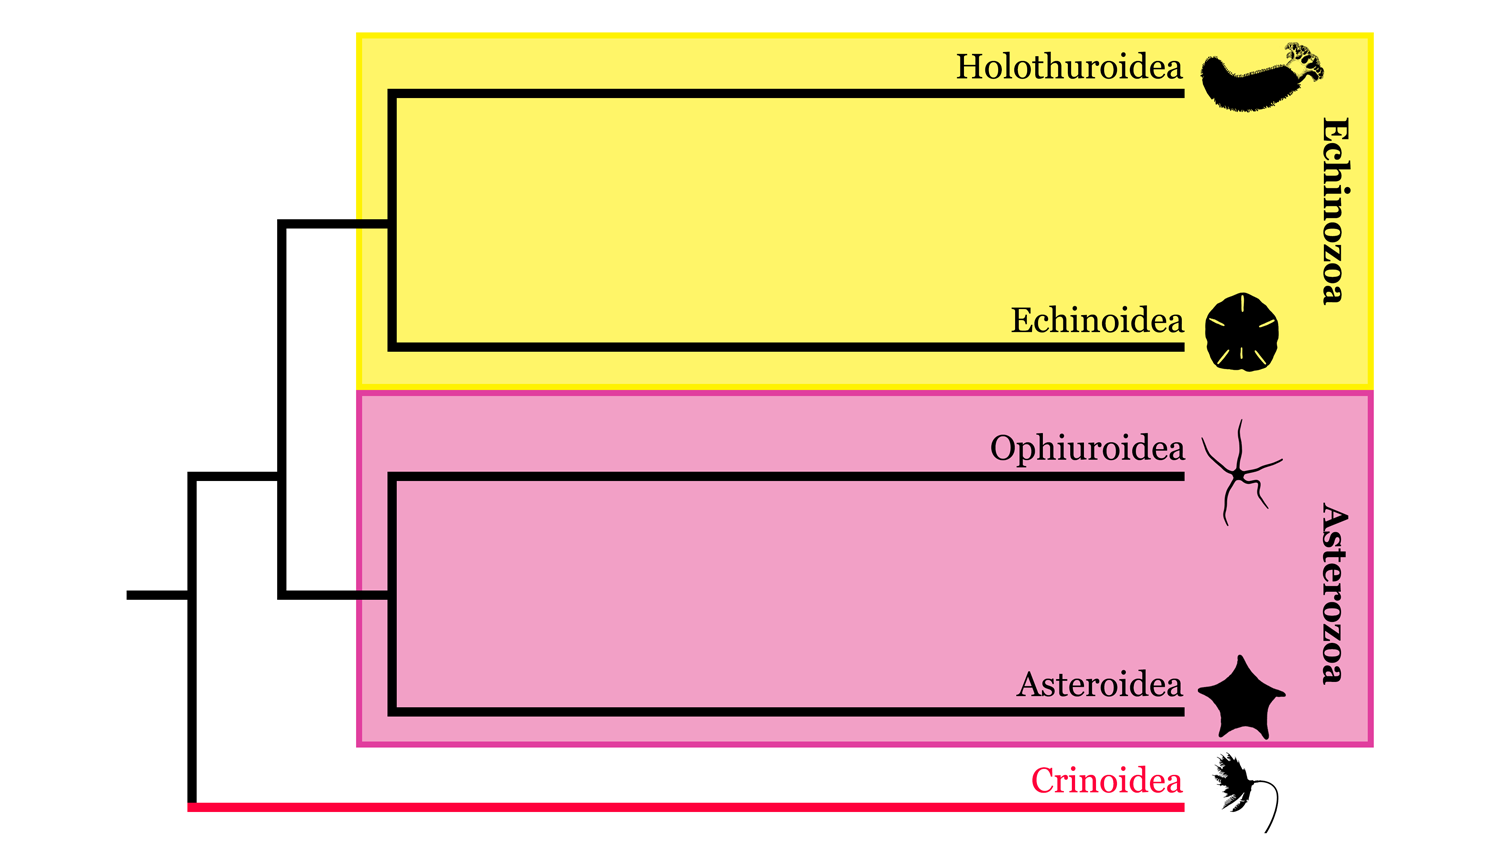 Image of Echinodermata phylogeny, highlighting where Crinoidea sits